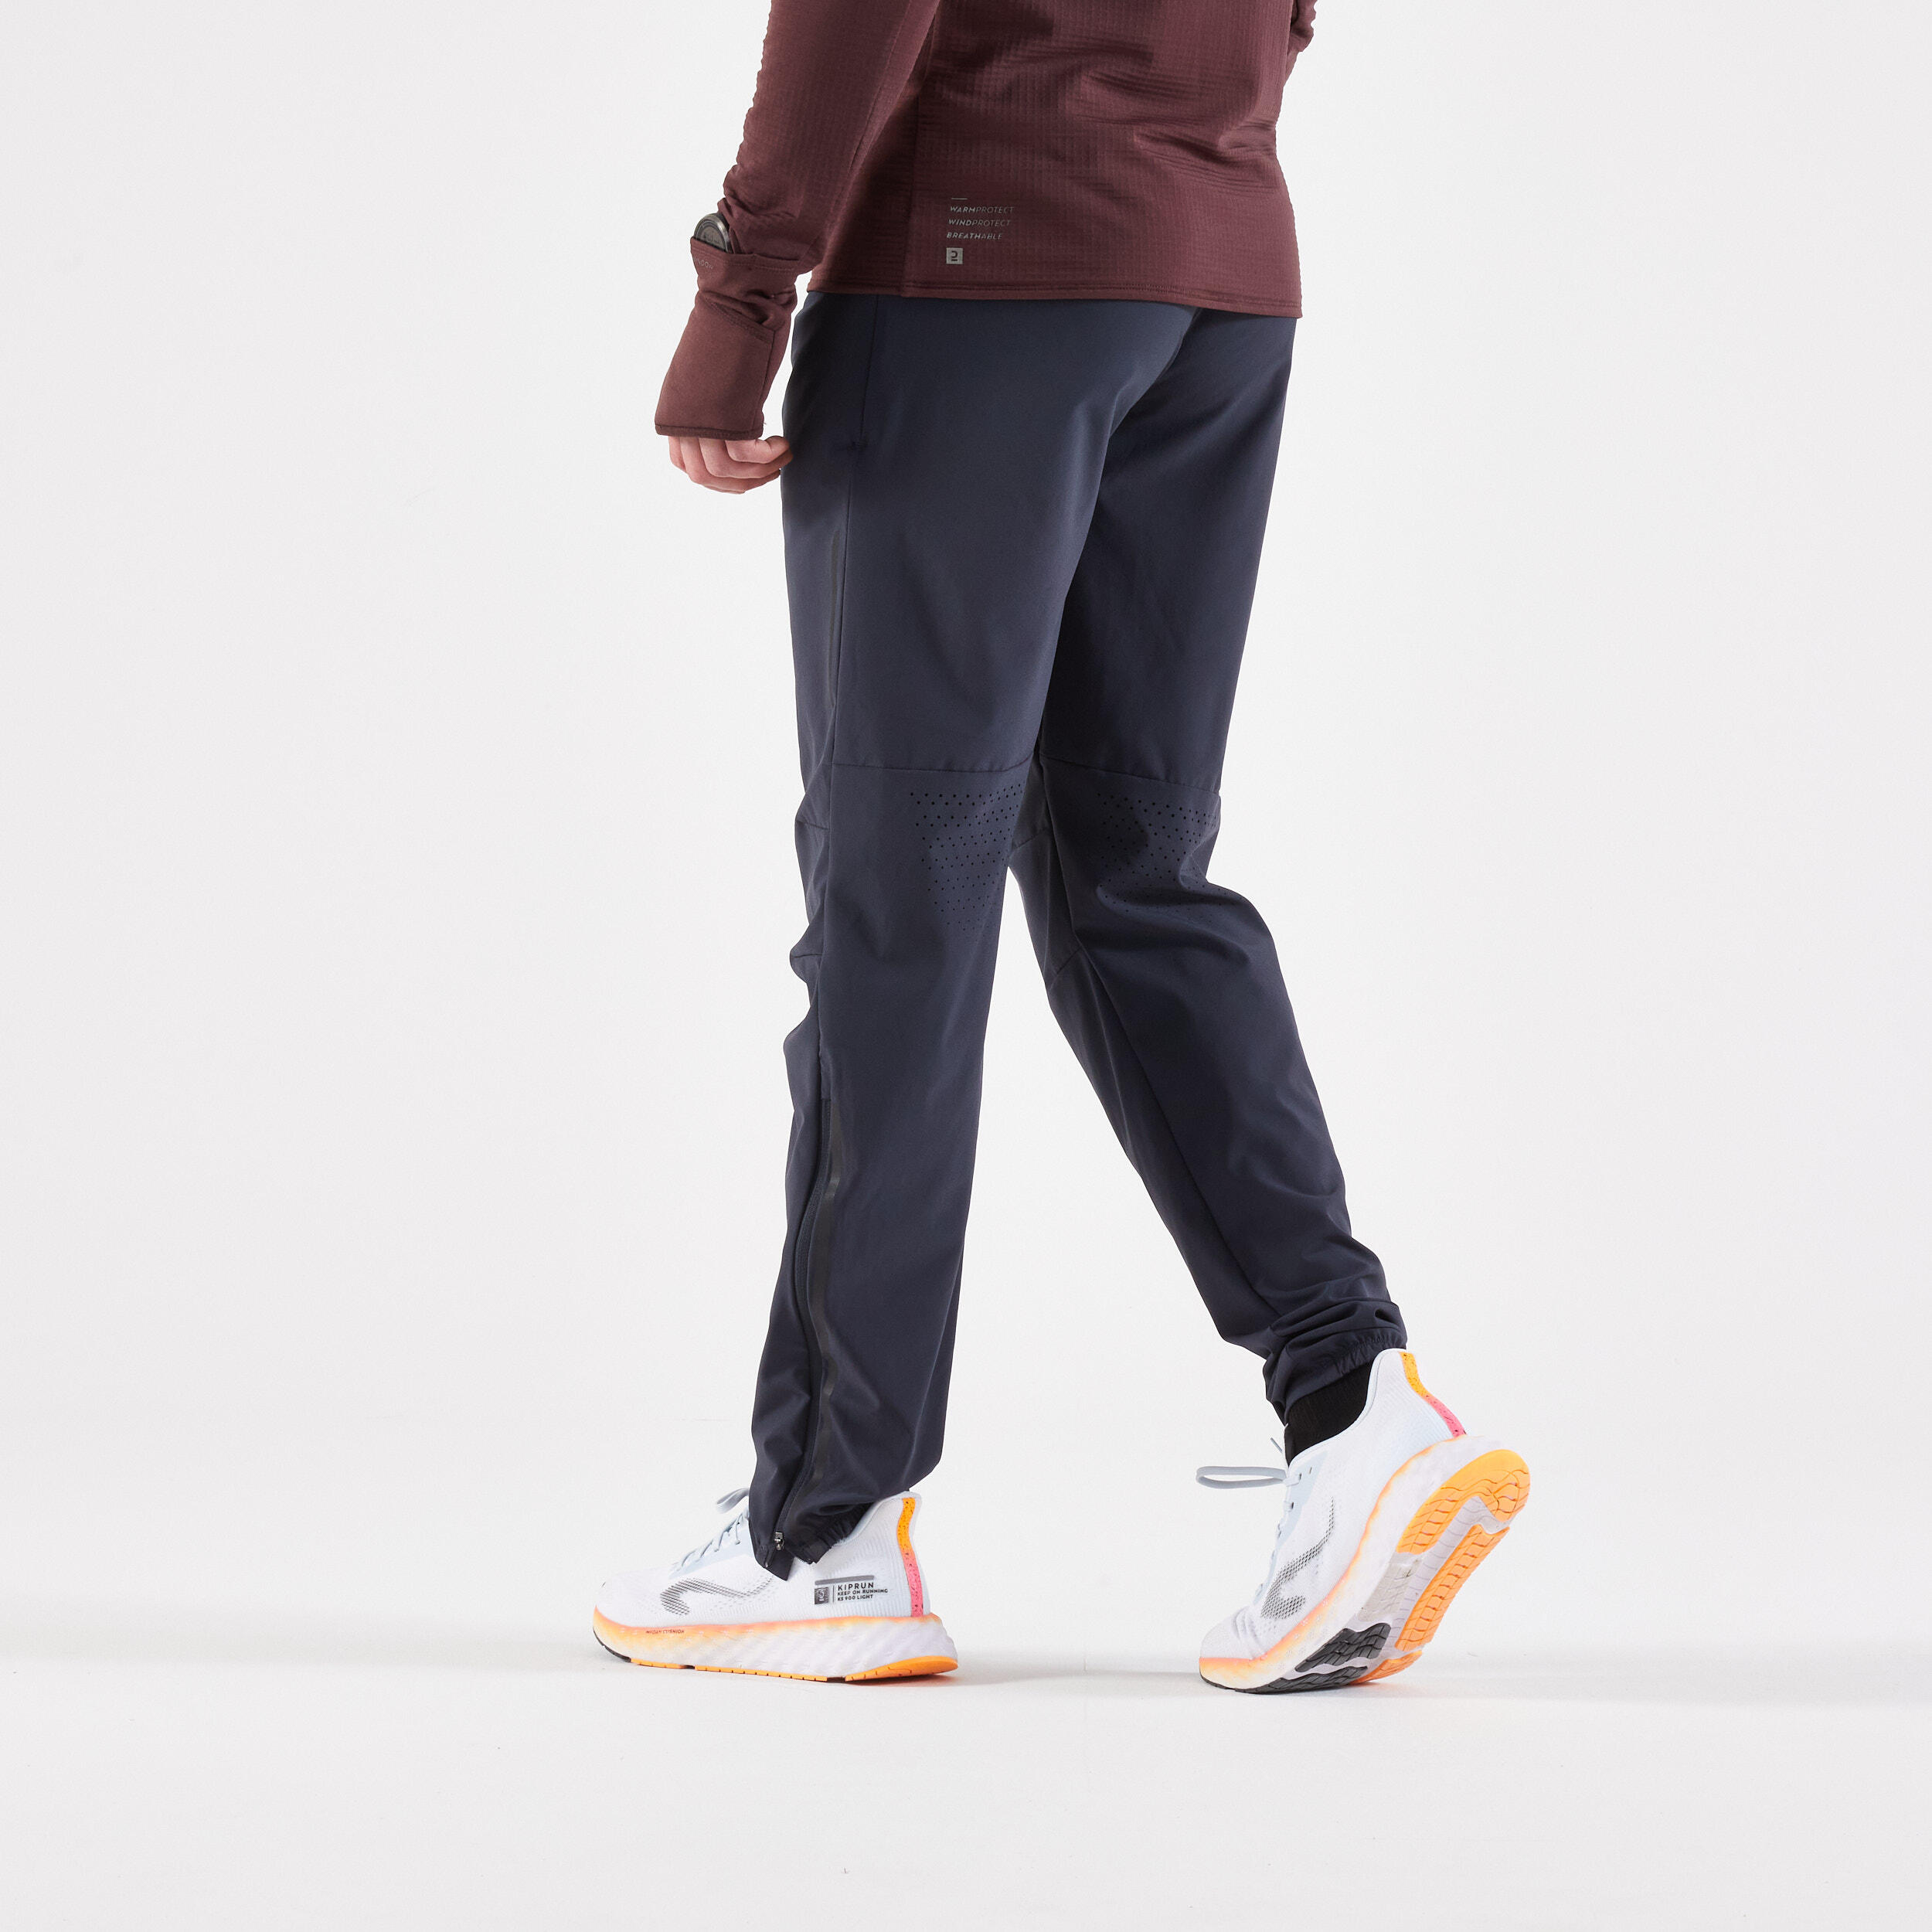 Men's breathable KIPRUN running trousers - grey 3/7